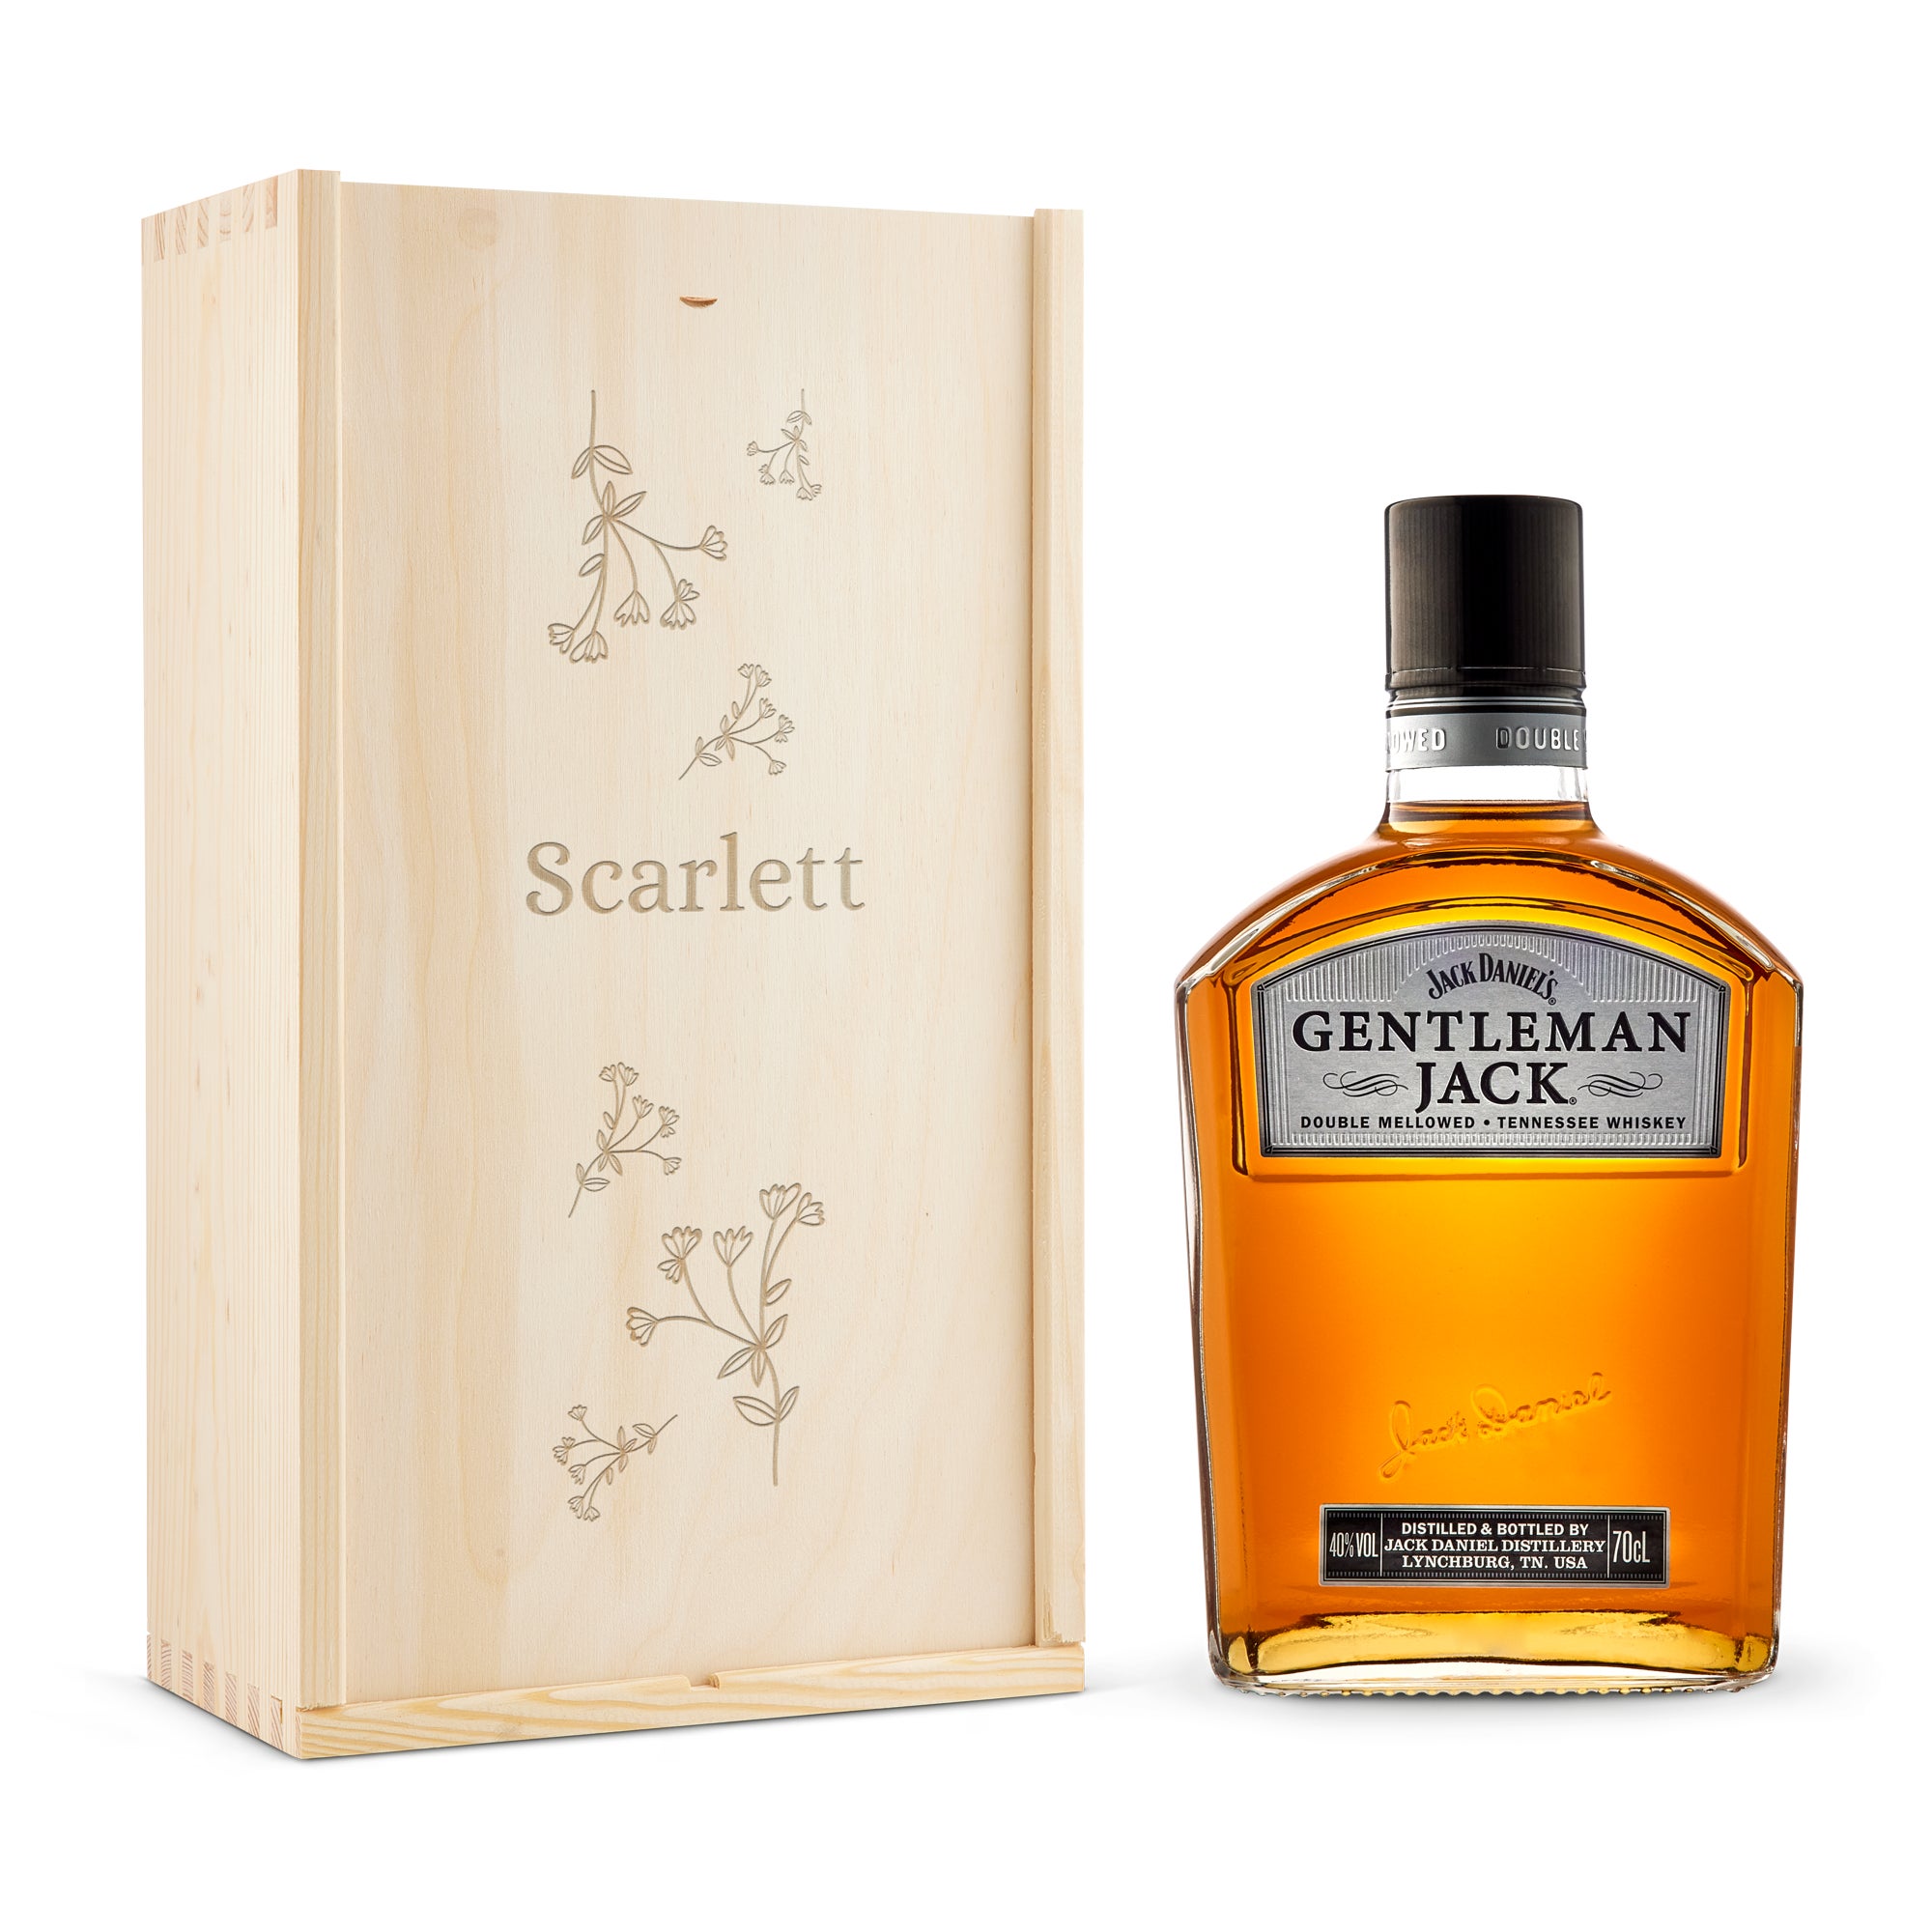 Personalised whiskey gift - Gentleman Jack - Engraved wooden case